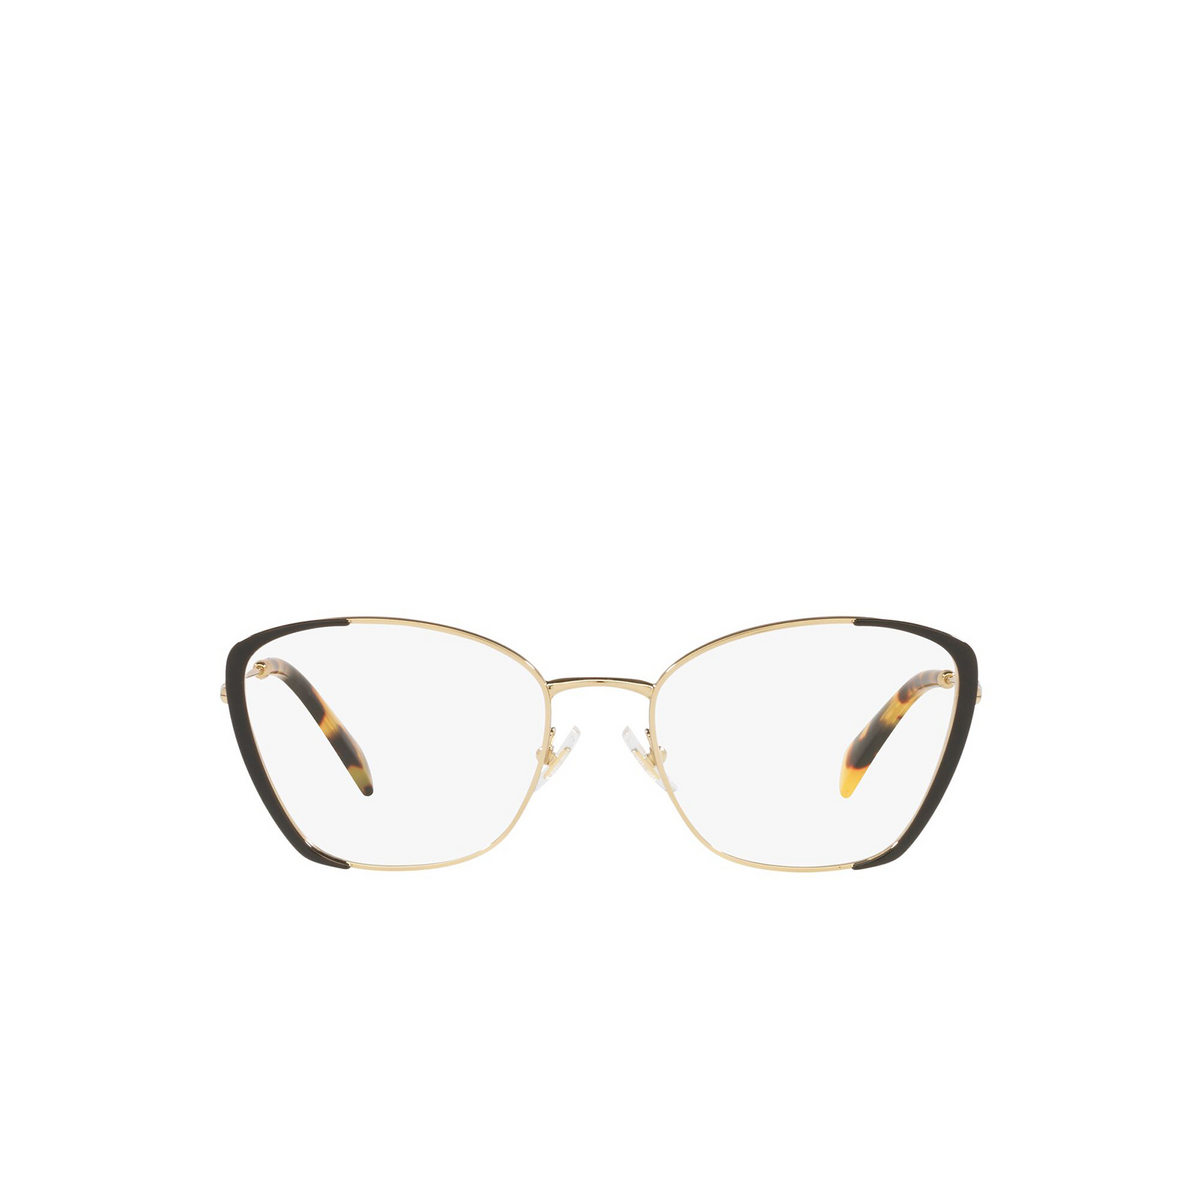 Miu Miu® Butterfly Eyeglasses: MU 51UV color Black AAV1O1 - front view.